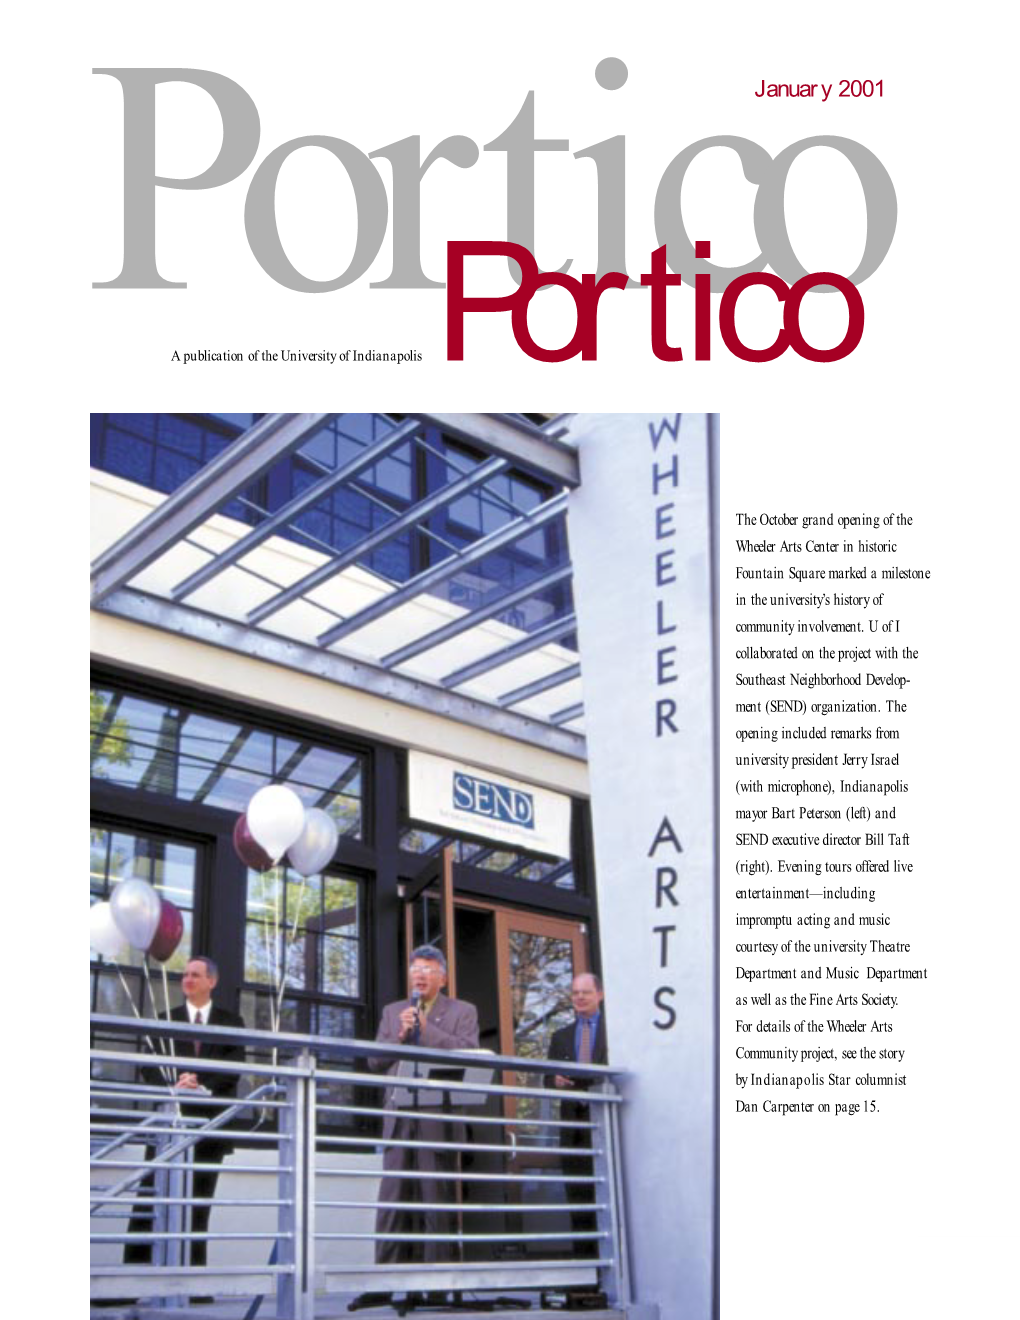 Portico-January 2001